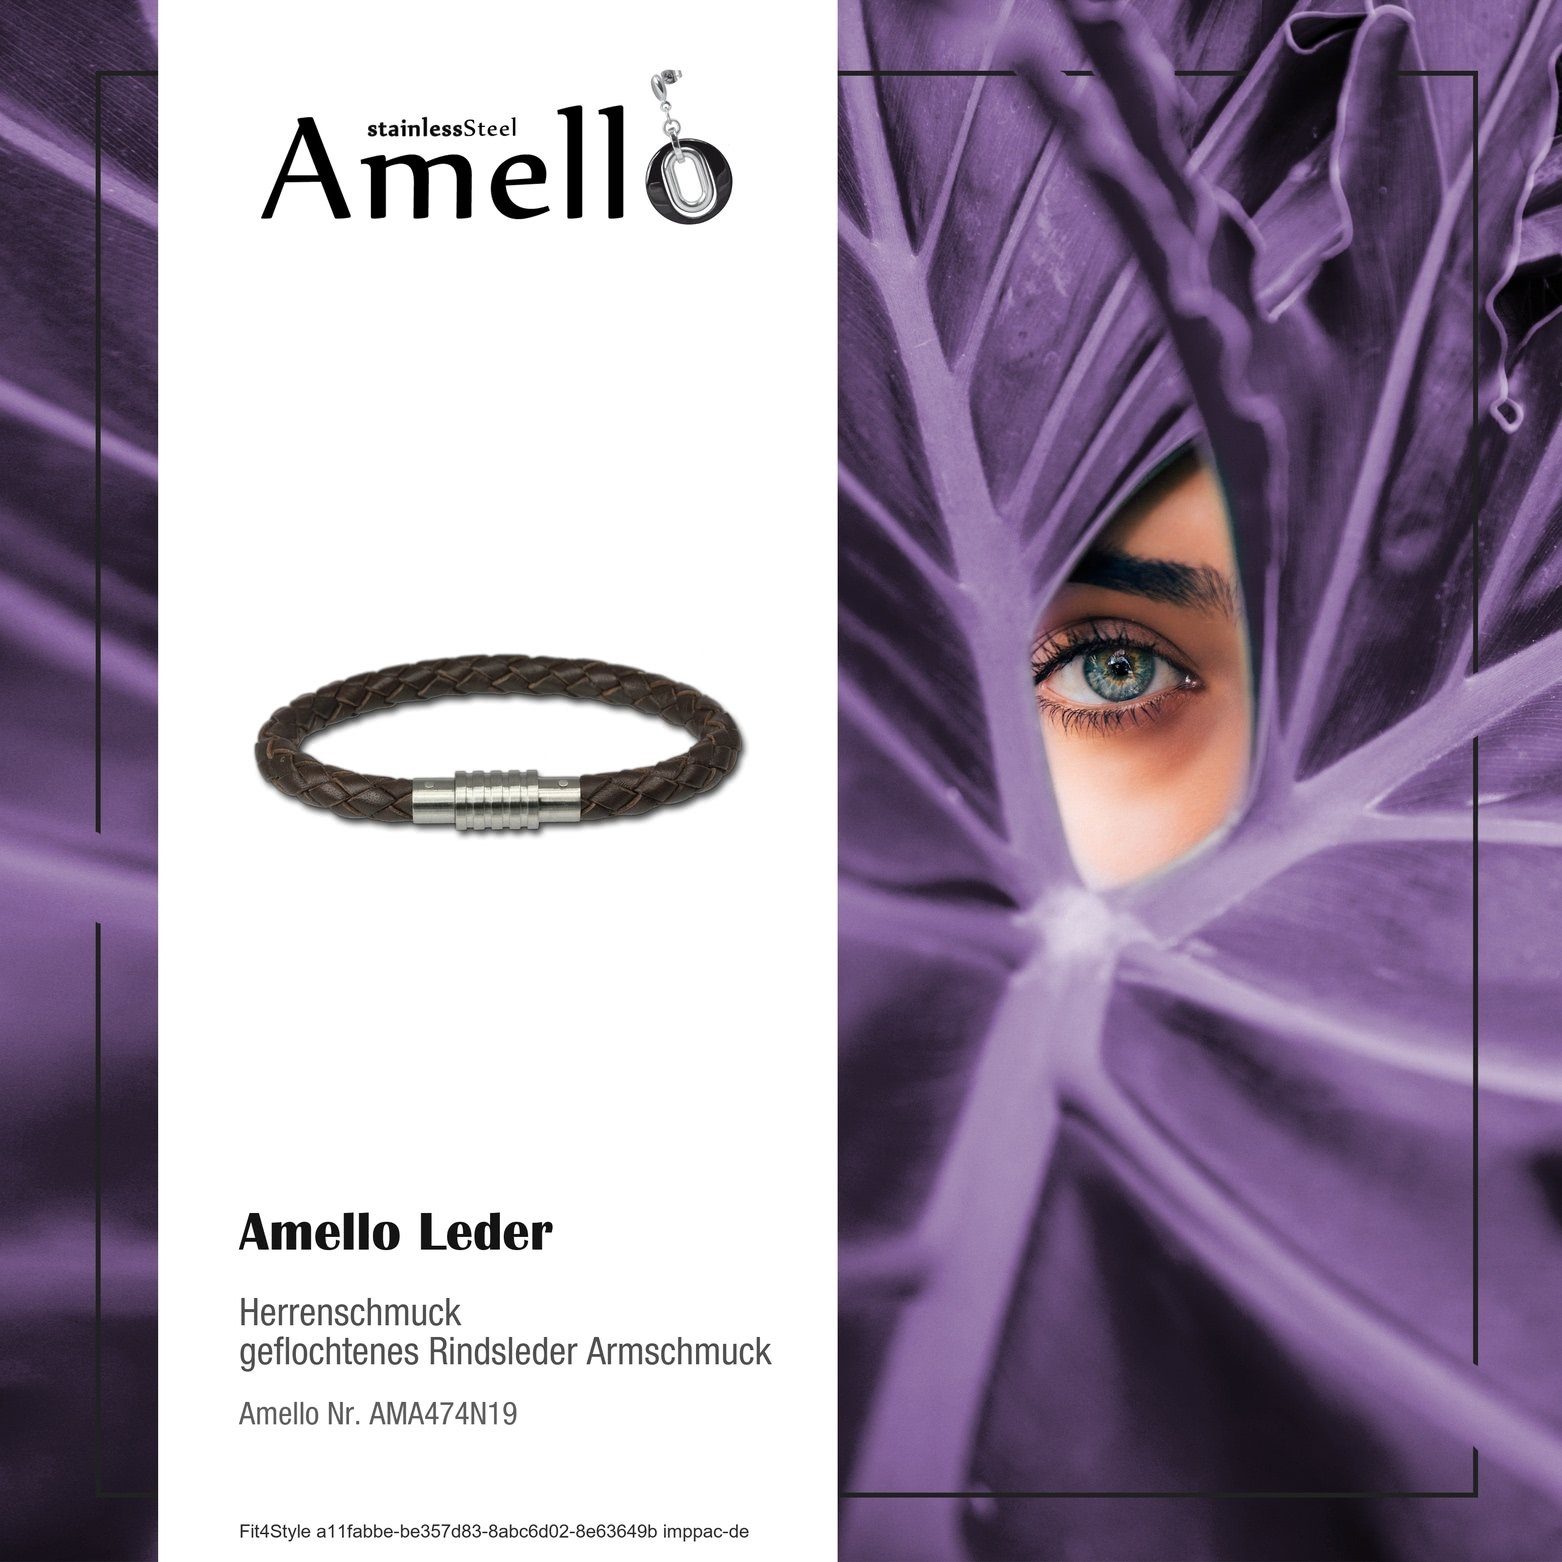 Herren Armschmuck Edelstahl braun Armband Amello 19cm, Farbe: Armband (Armband), Steel), ca. braun Amello Herren Edelstahlarmband (Stainless